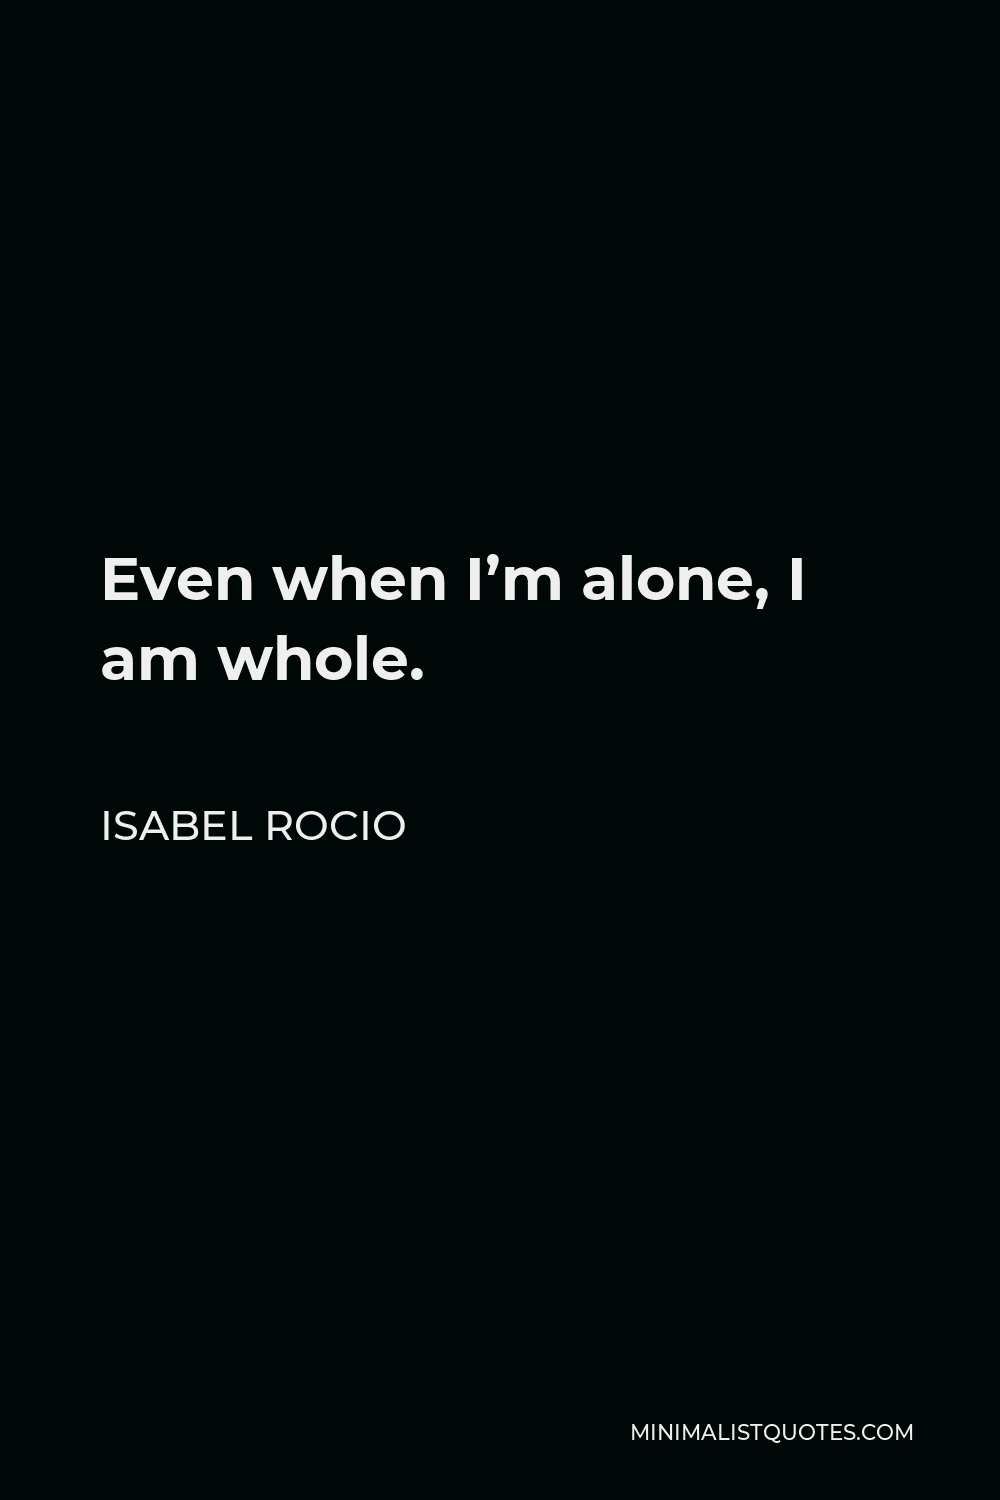 Isabel Rocio Quote - Even when I’m alone, I am whole.